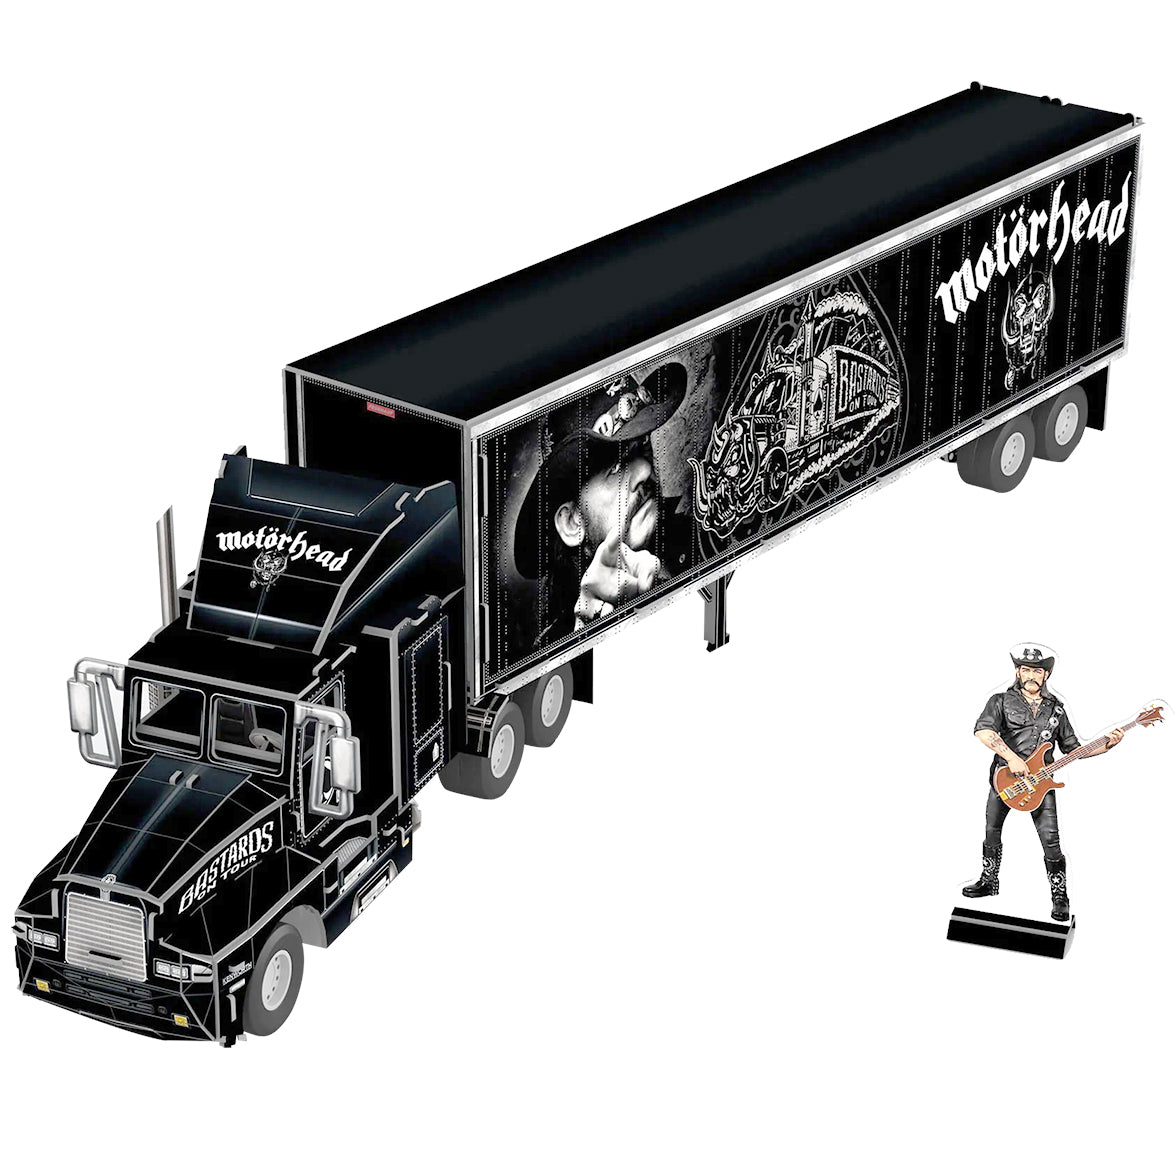 Revell - 3D Puzzle Motorhead Tour Truck